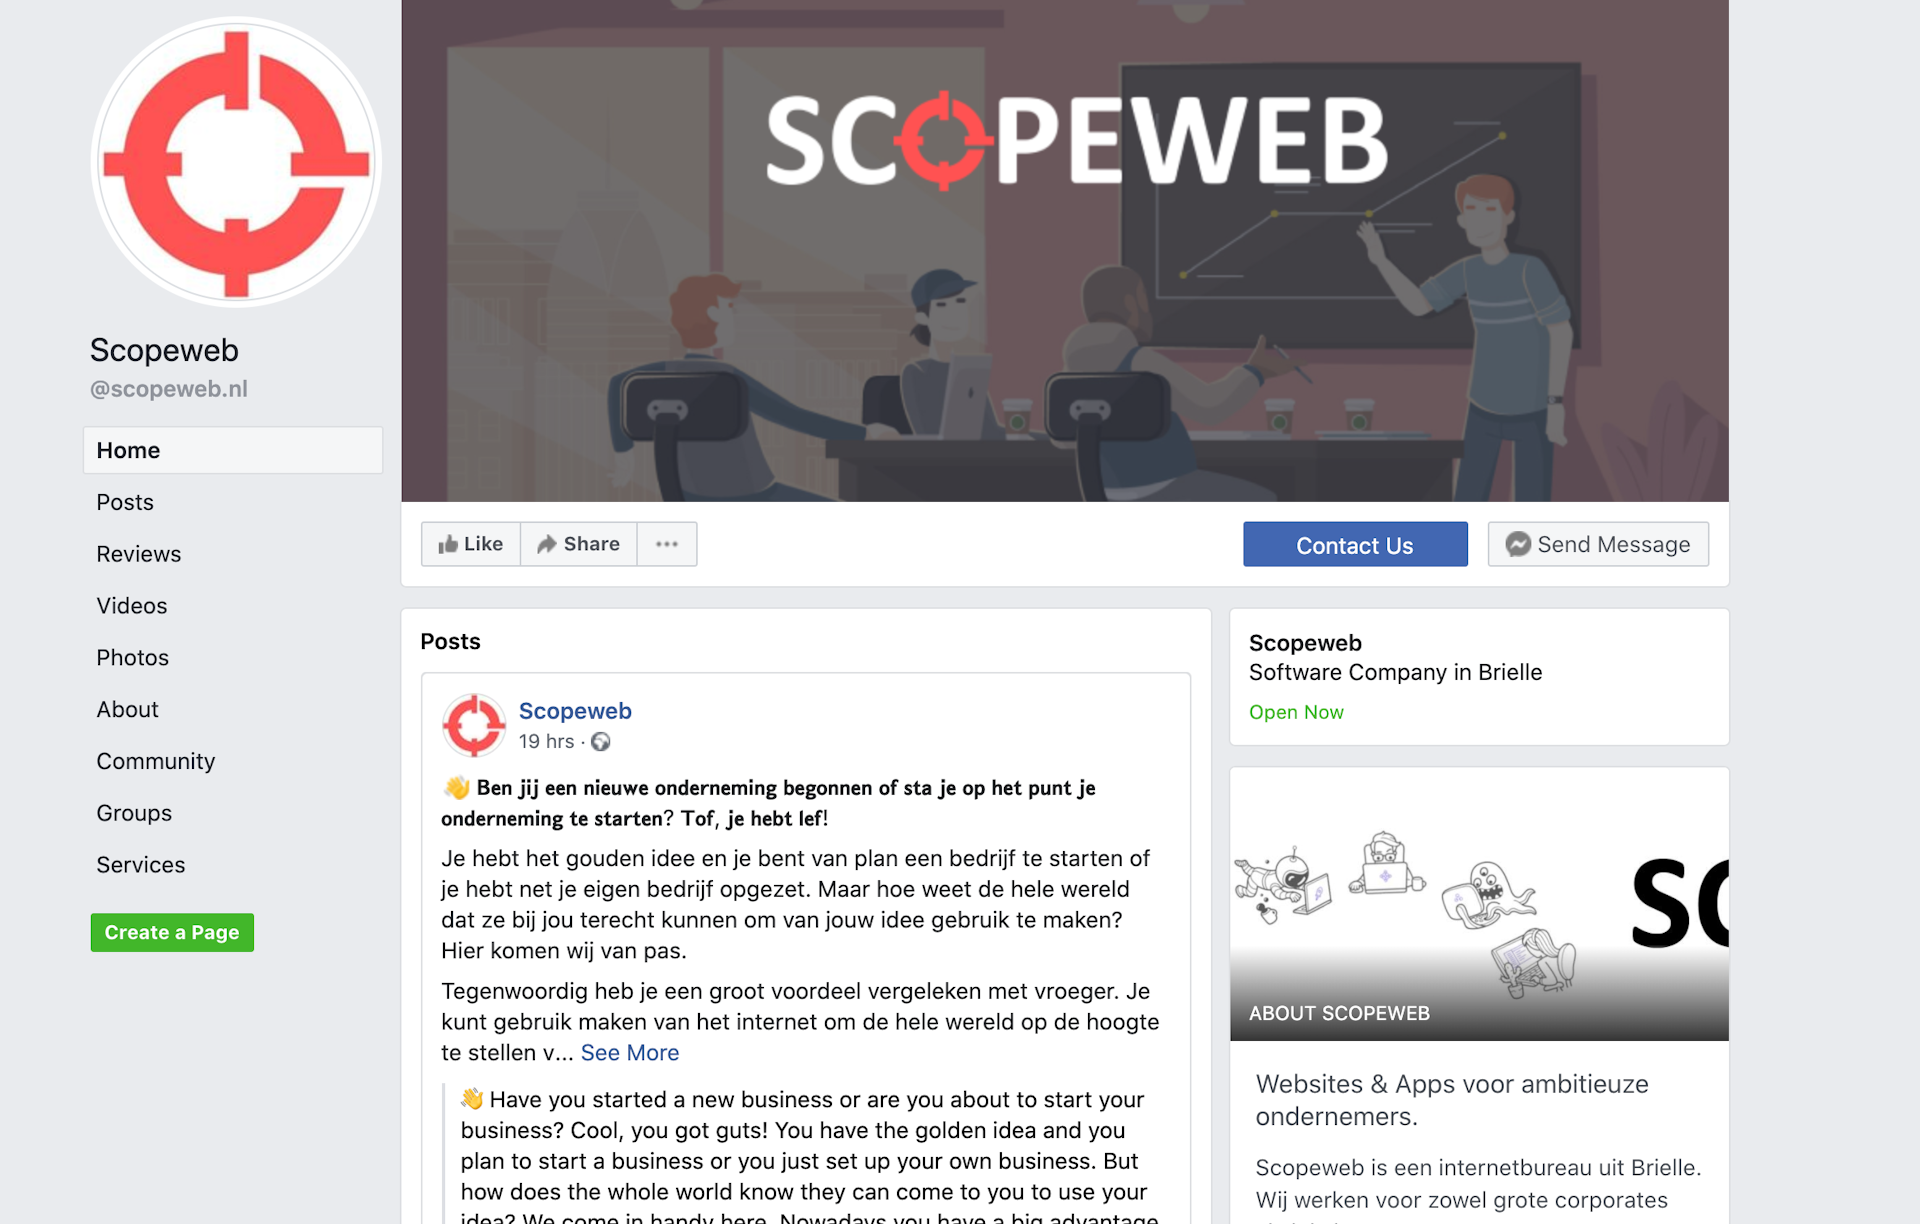 SCOPEWEB Facebook page